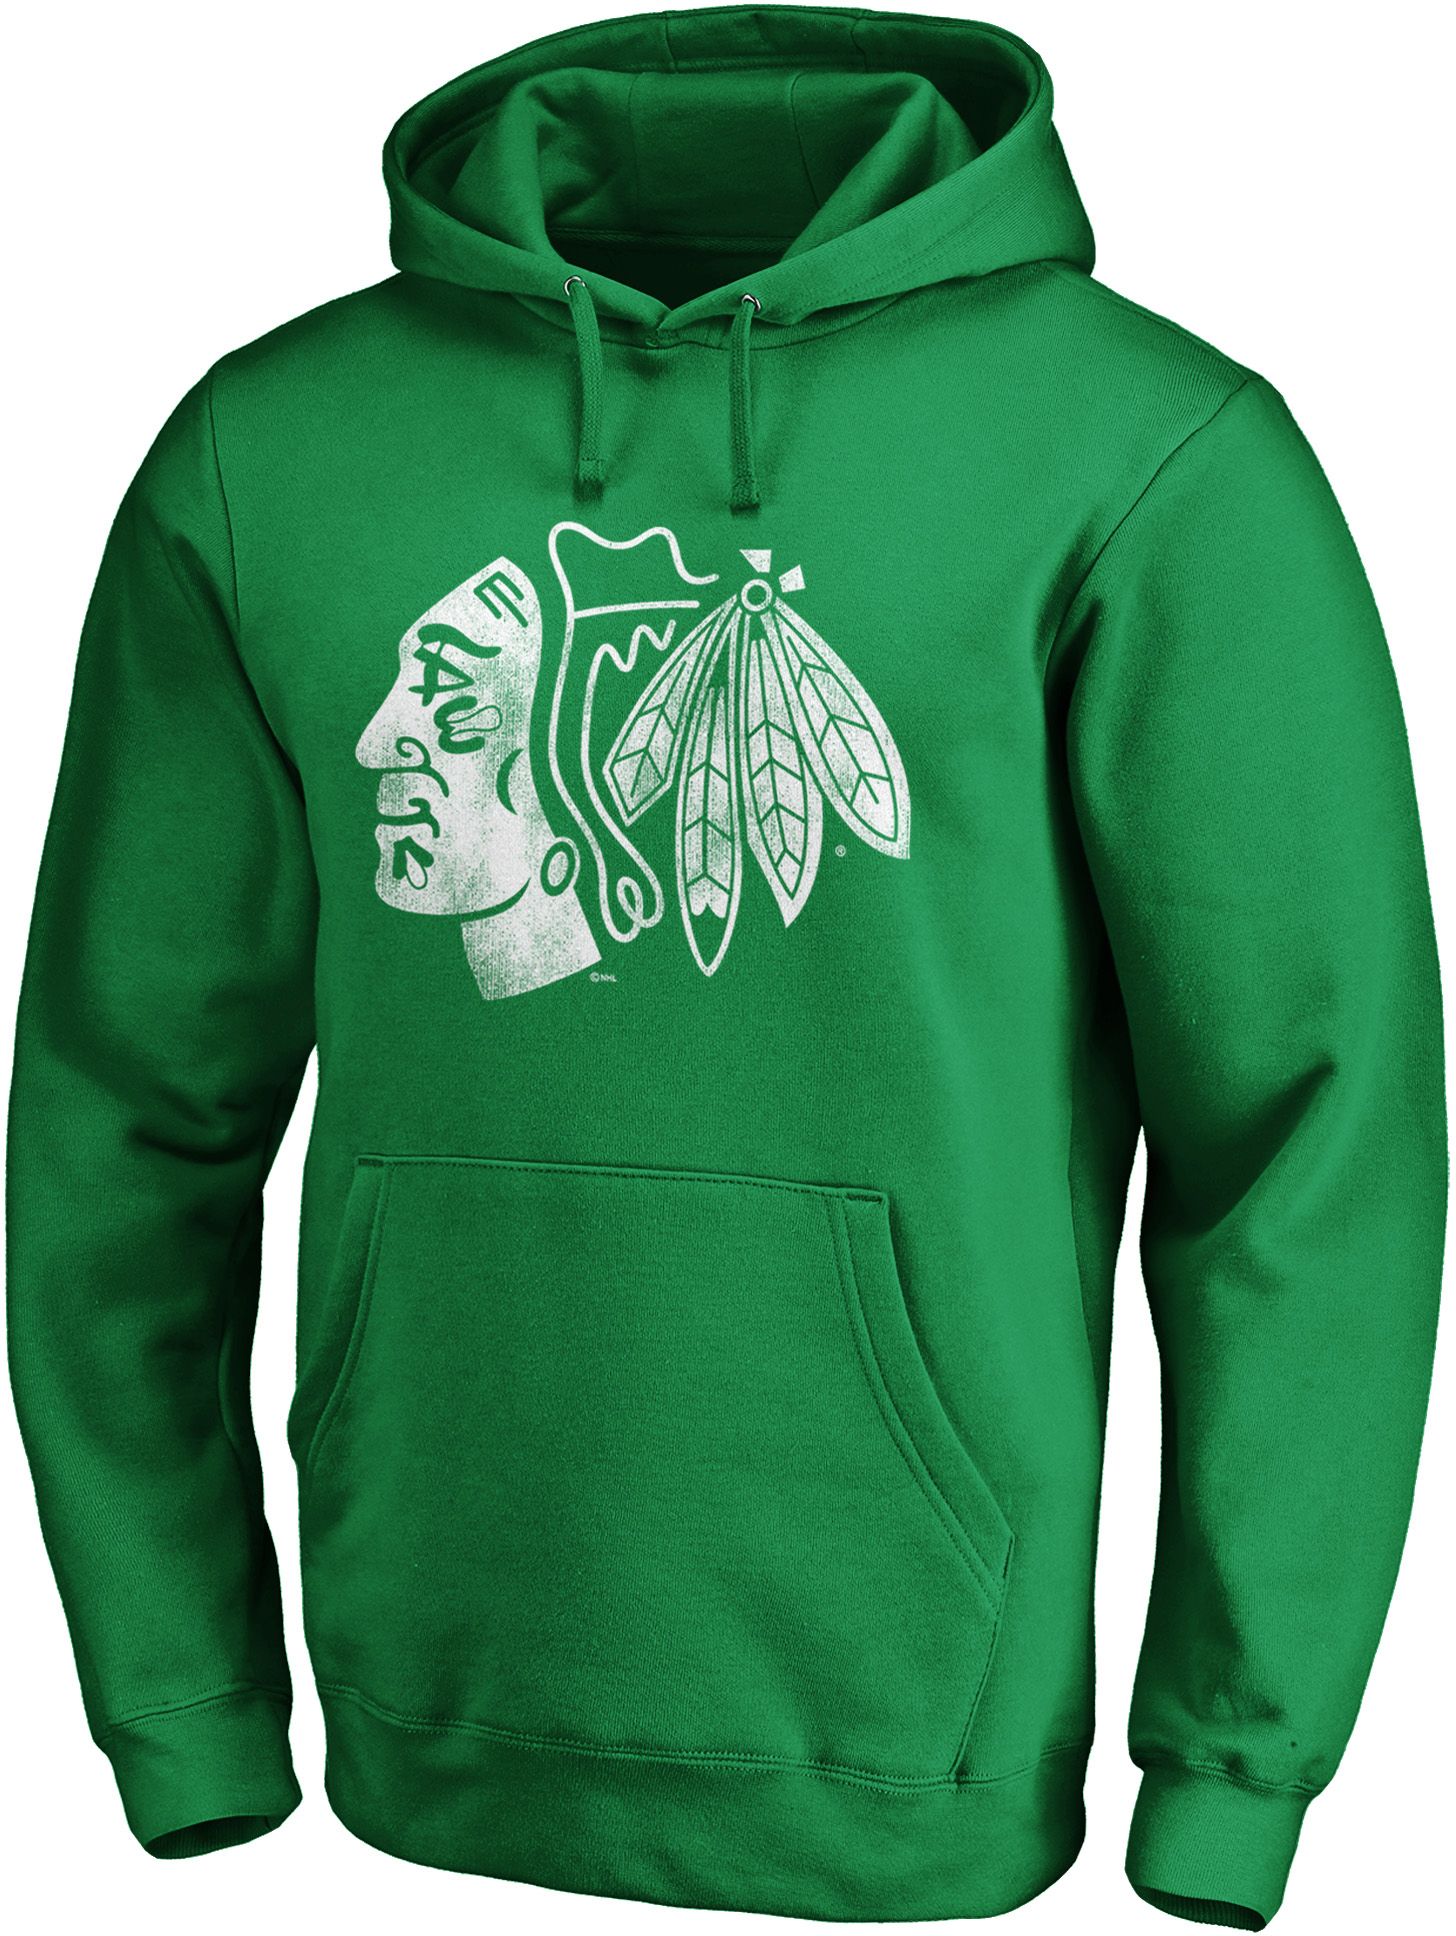 green chicago blackhawks hoodie